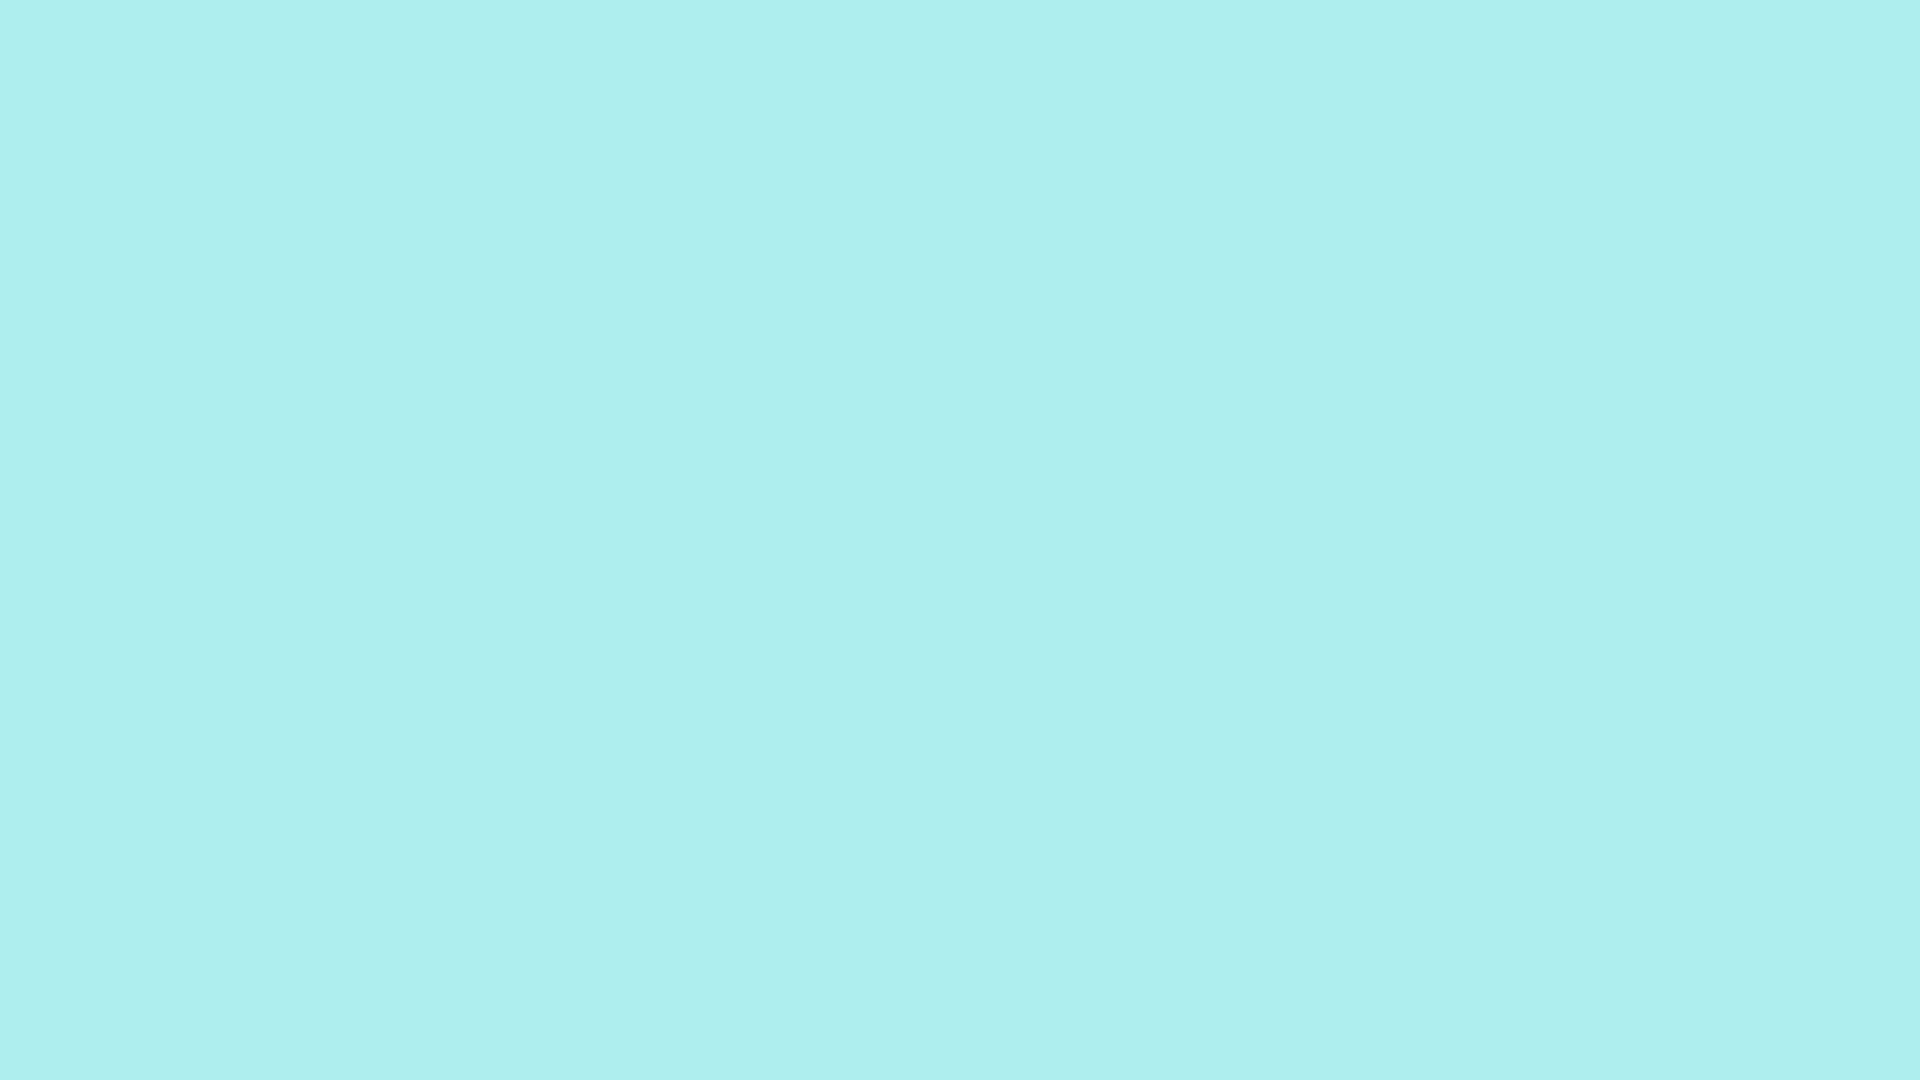 1920x1080 Pale Blue Solid Color Background